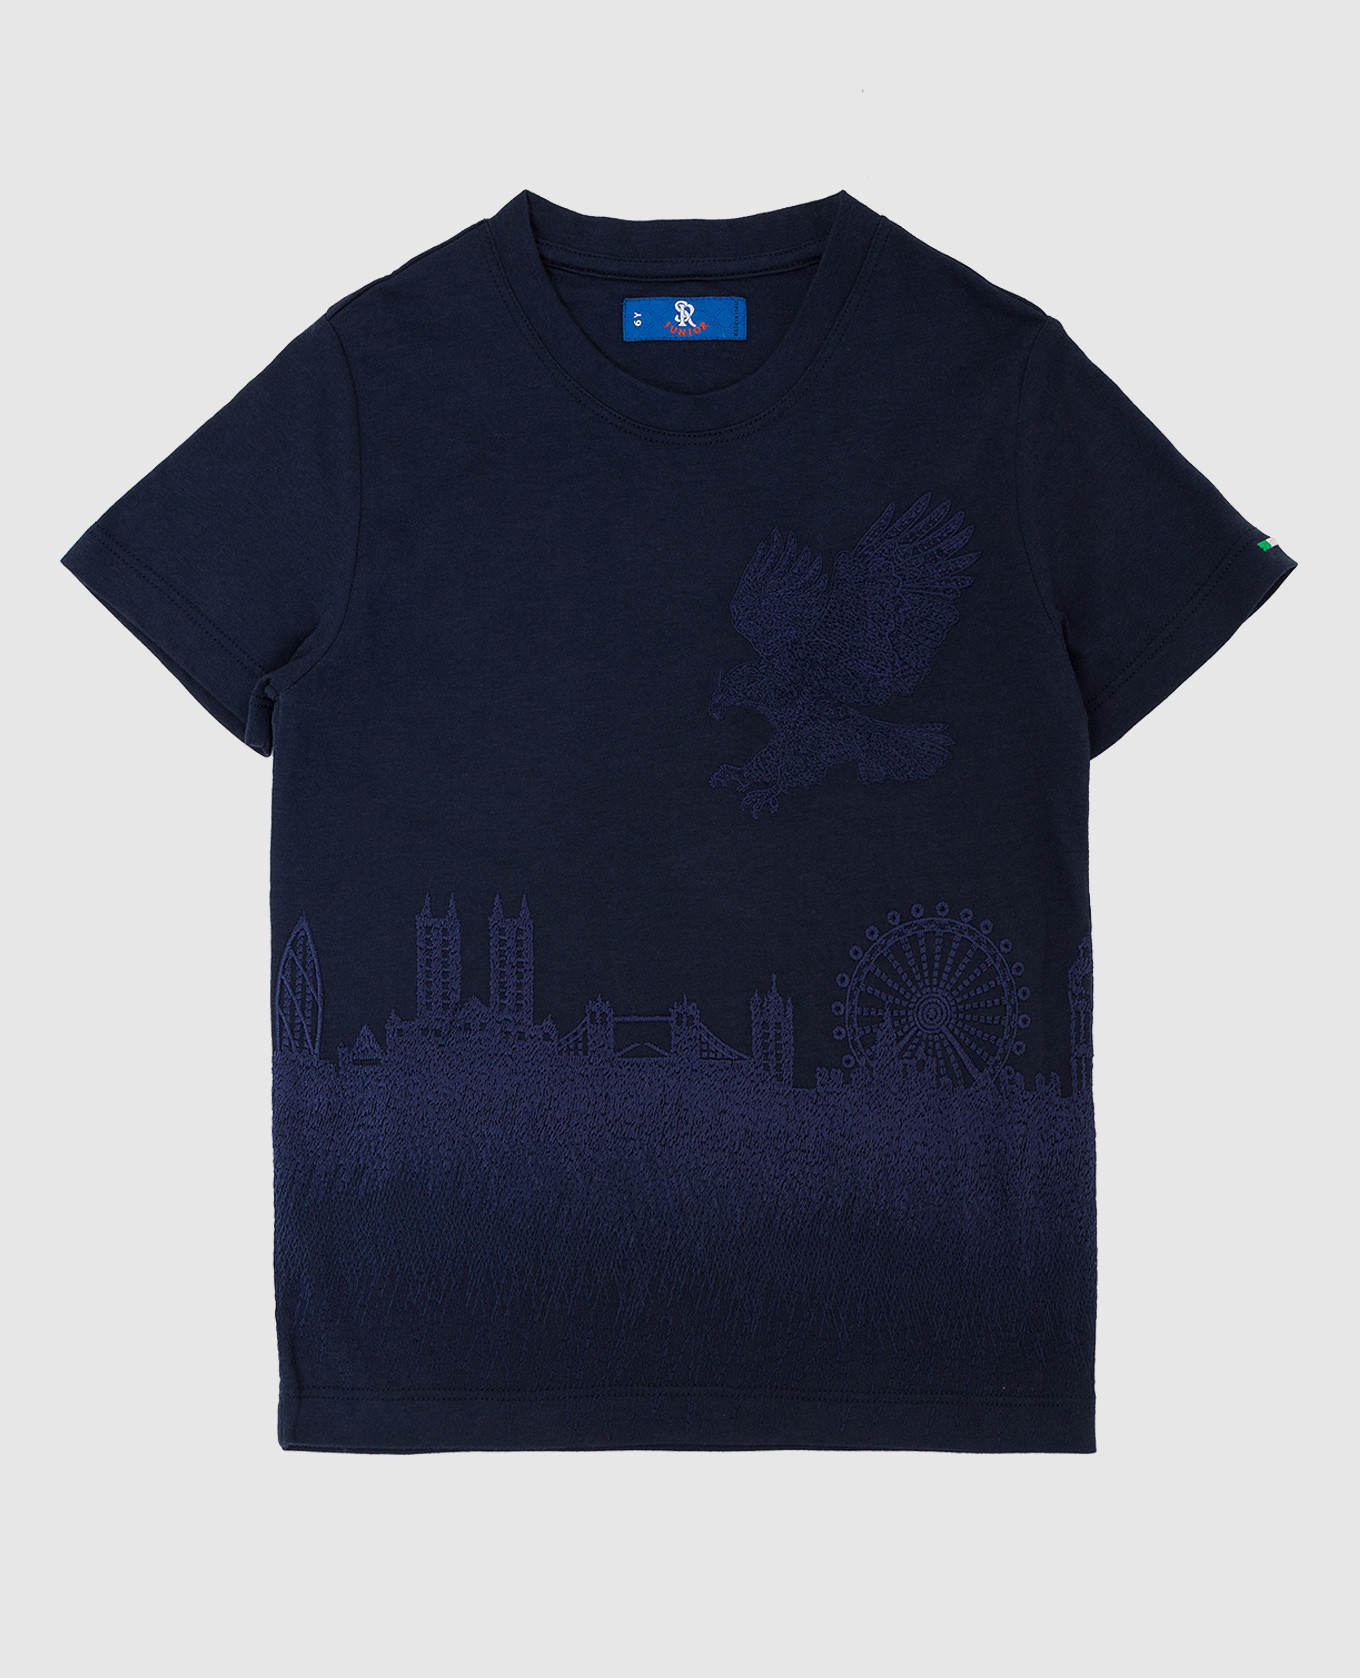 Children's dark blue t-shirt with embroidery